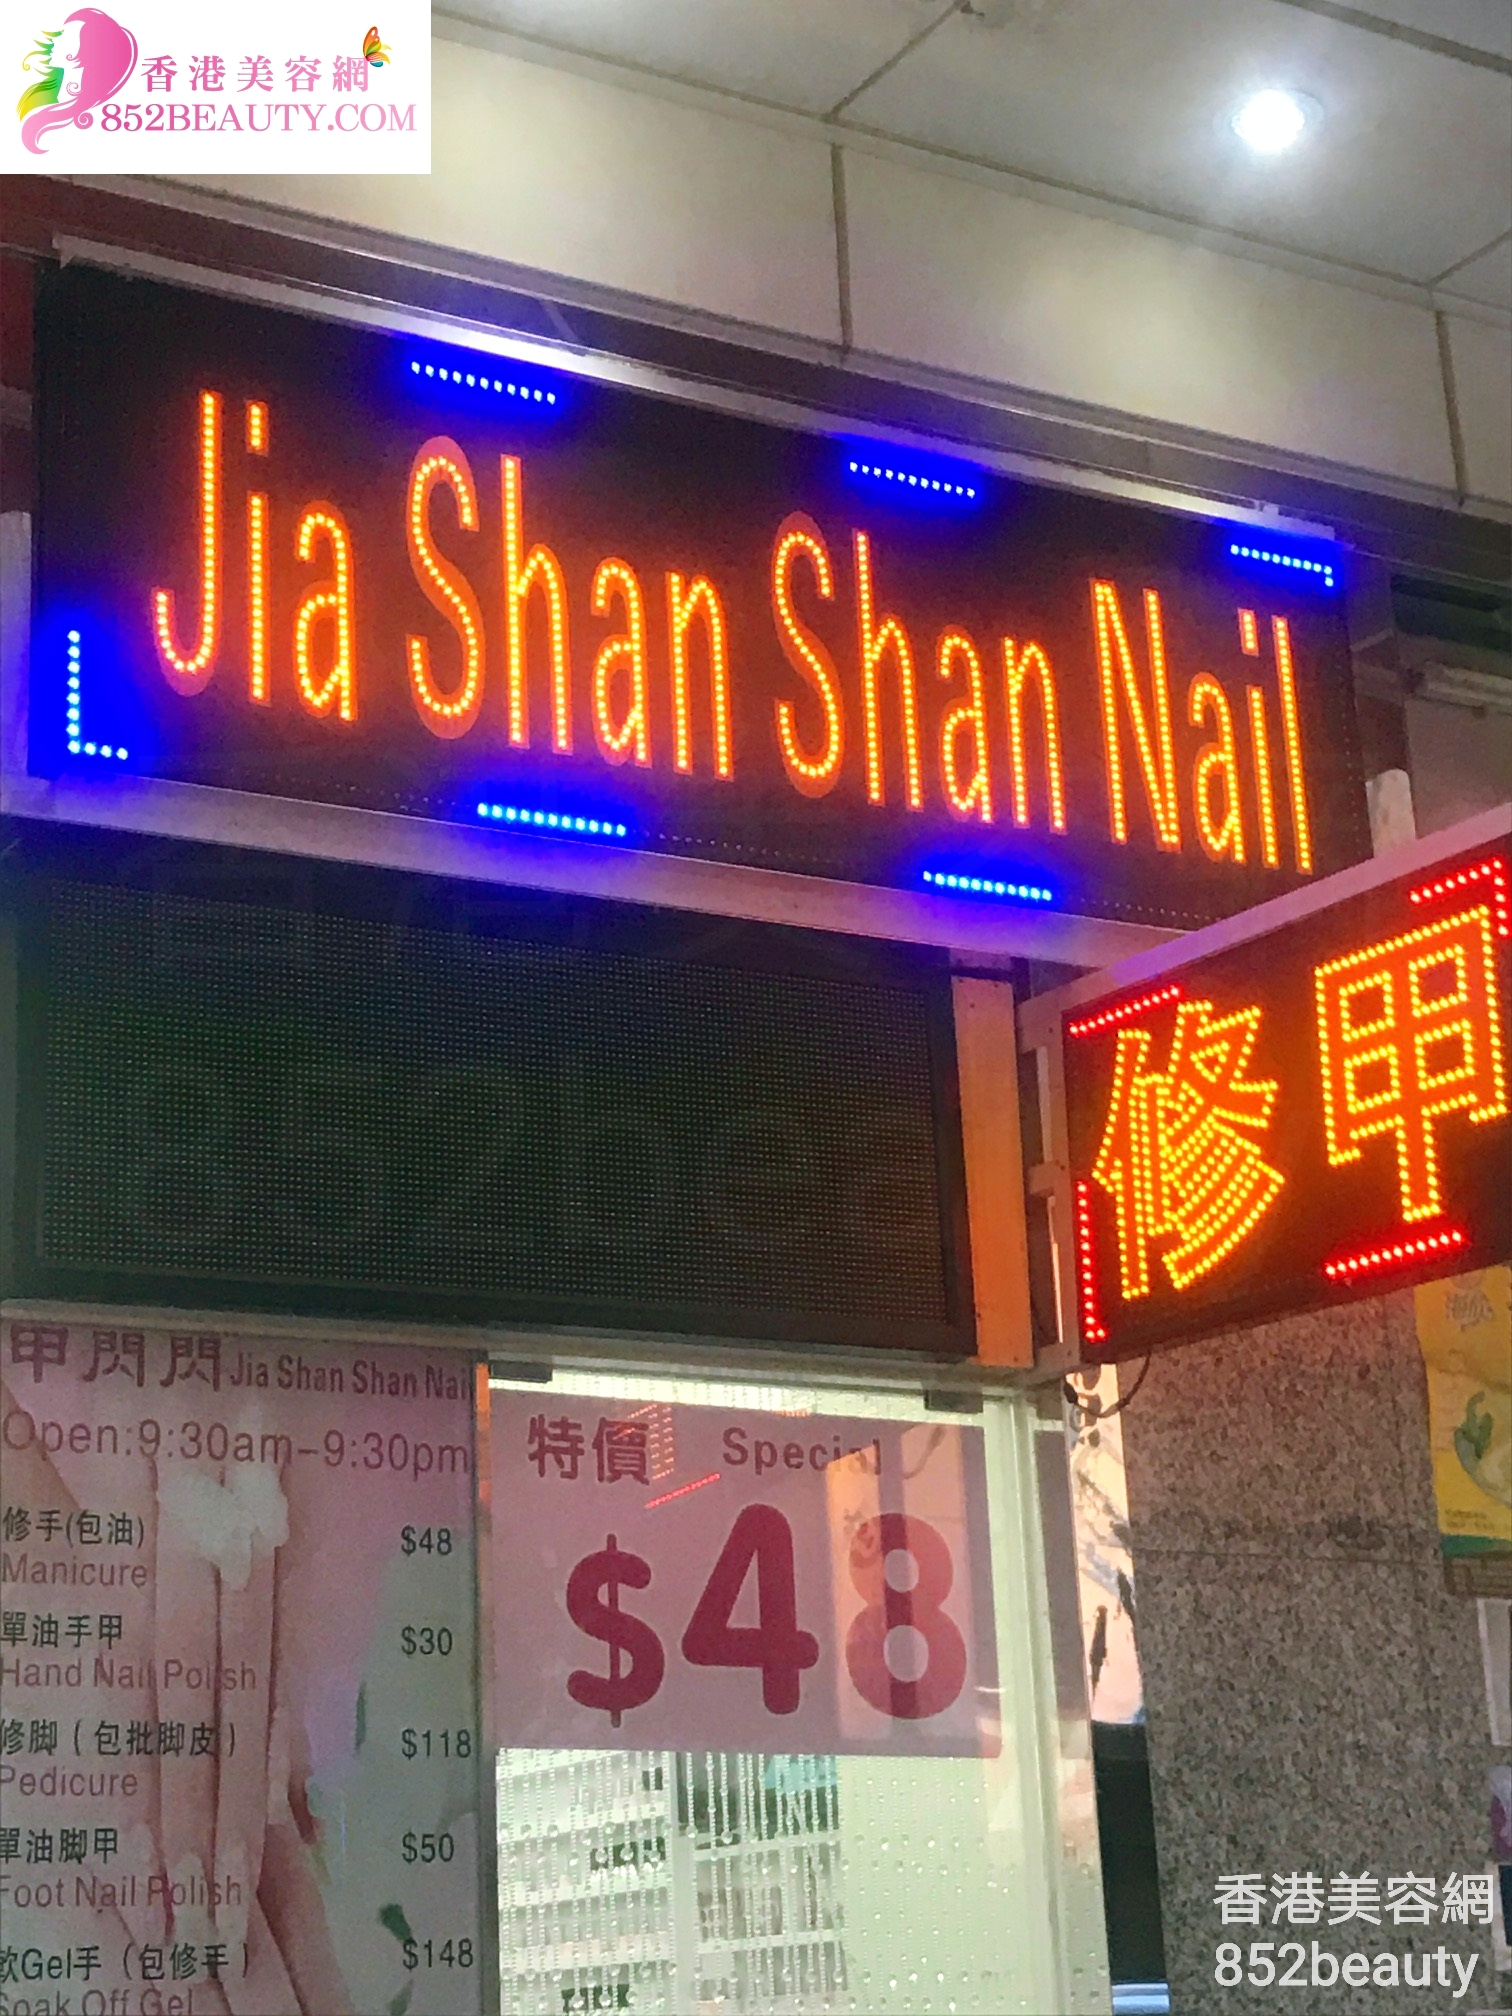 美甲: Jia Shan Shan Nail